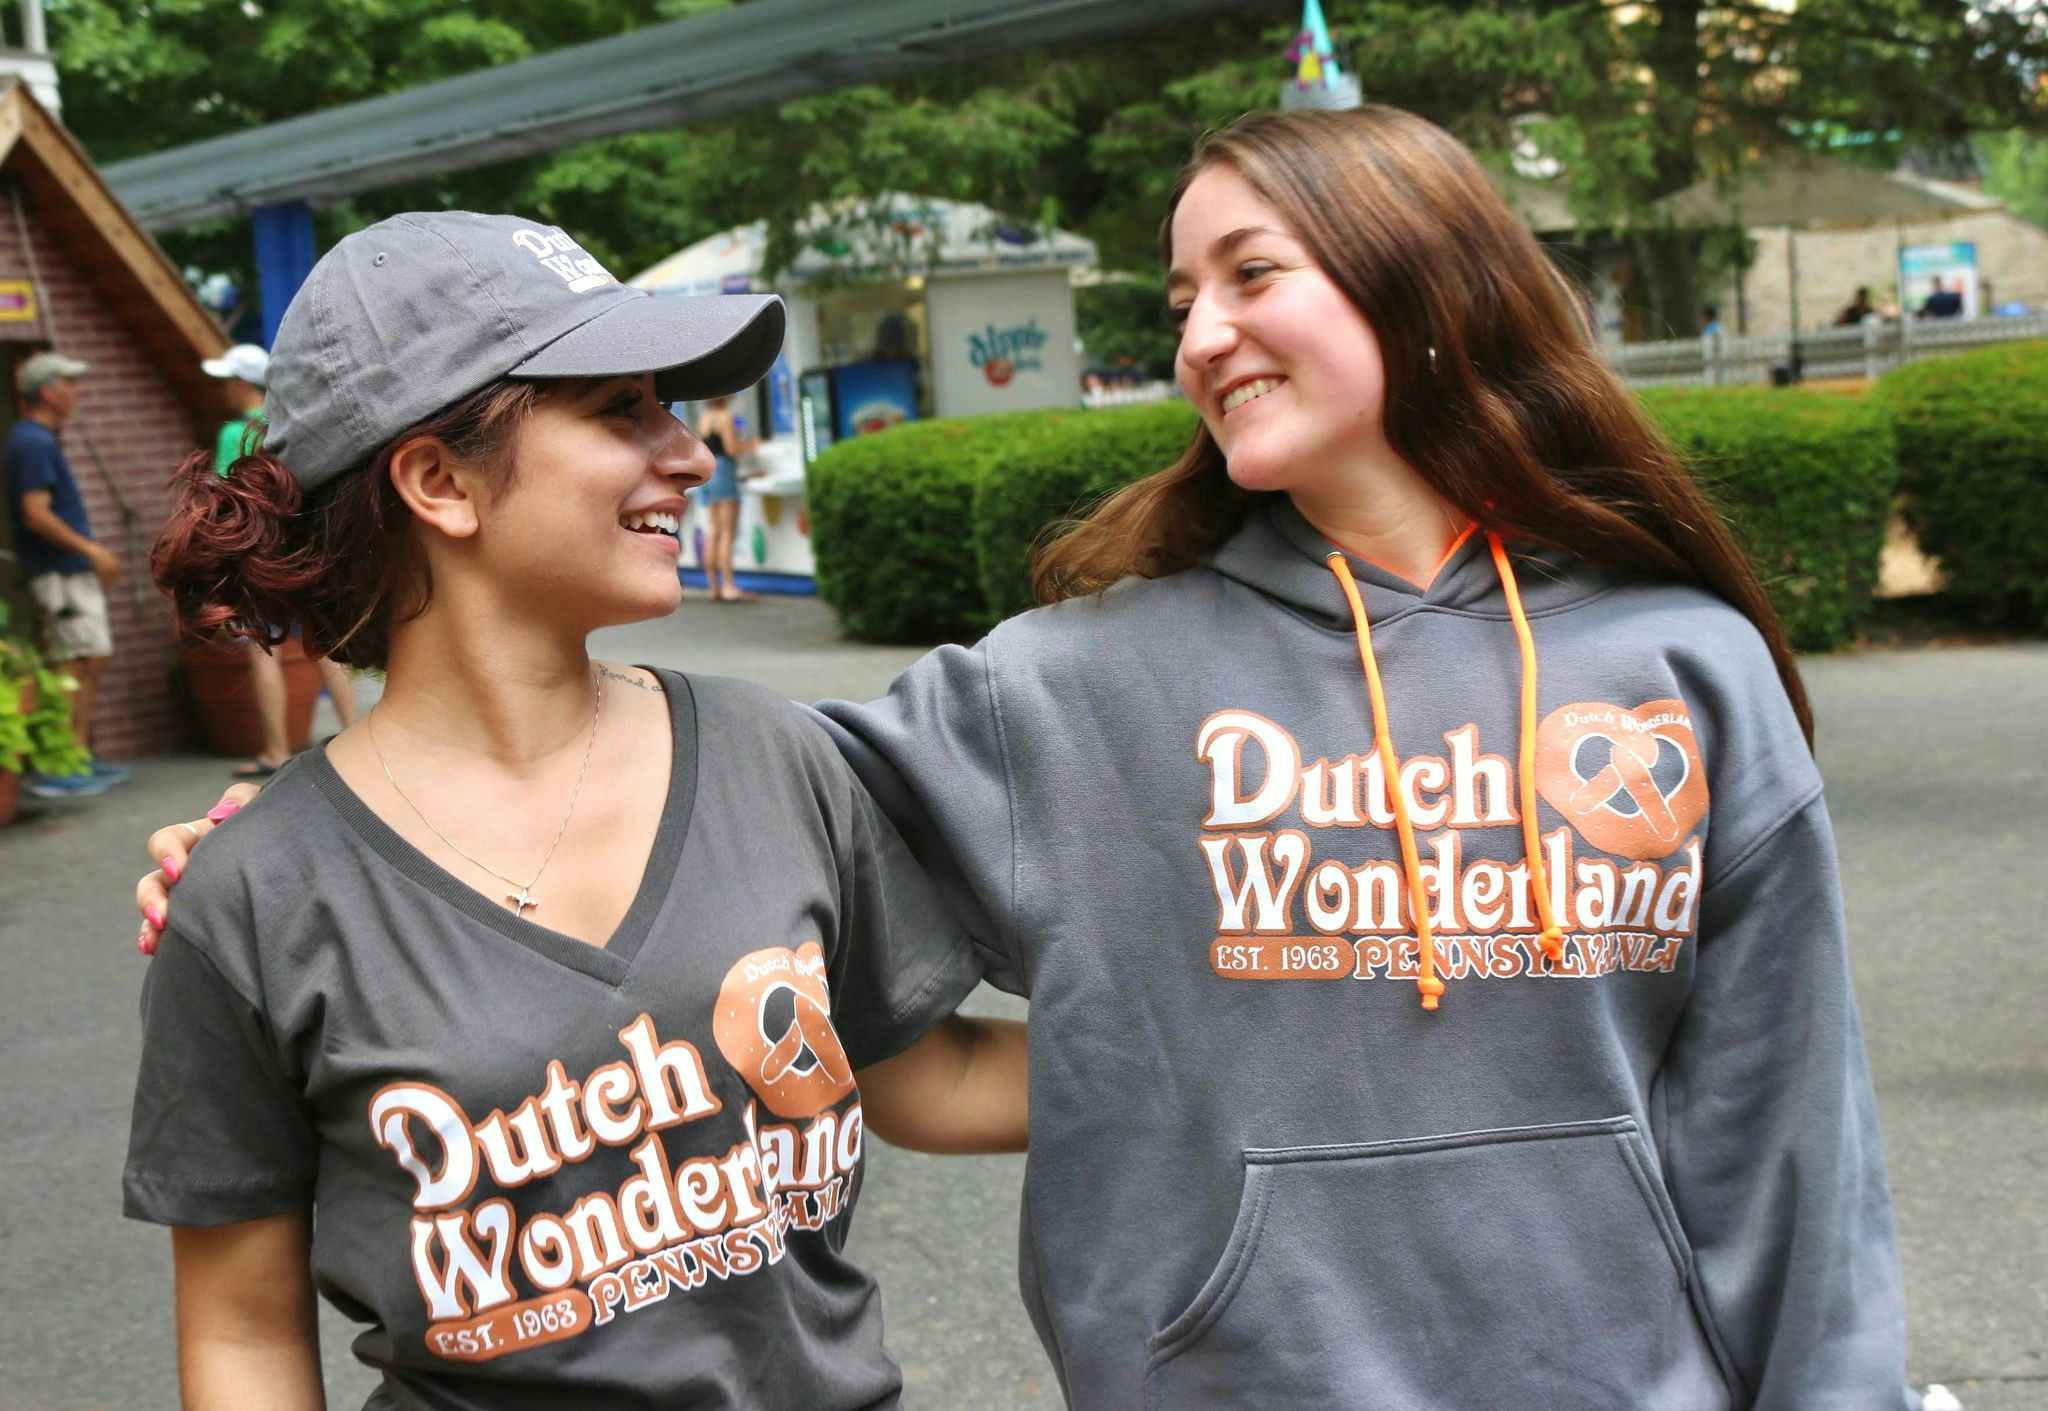 Two friends wearing Dutch Wonderland merchandise having fun at the park.